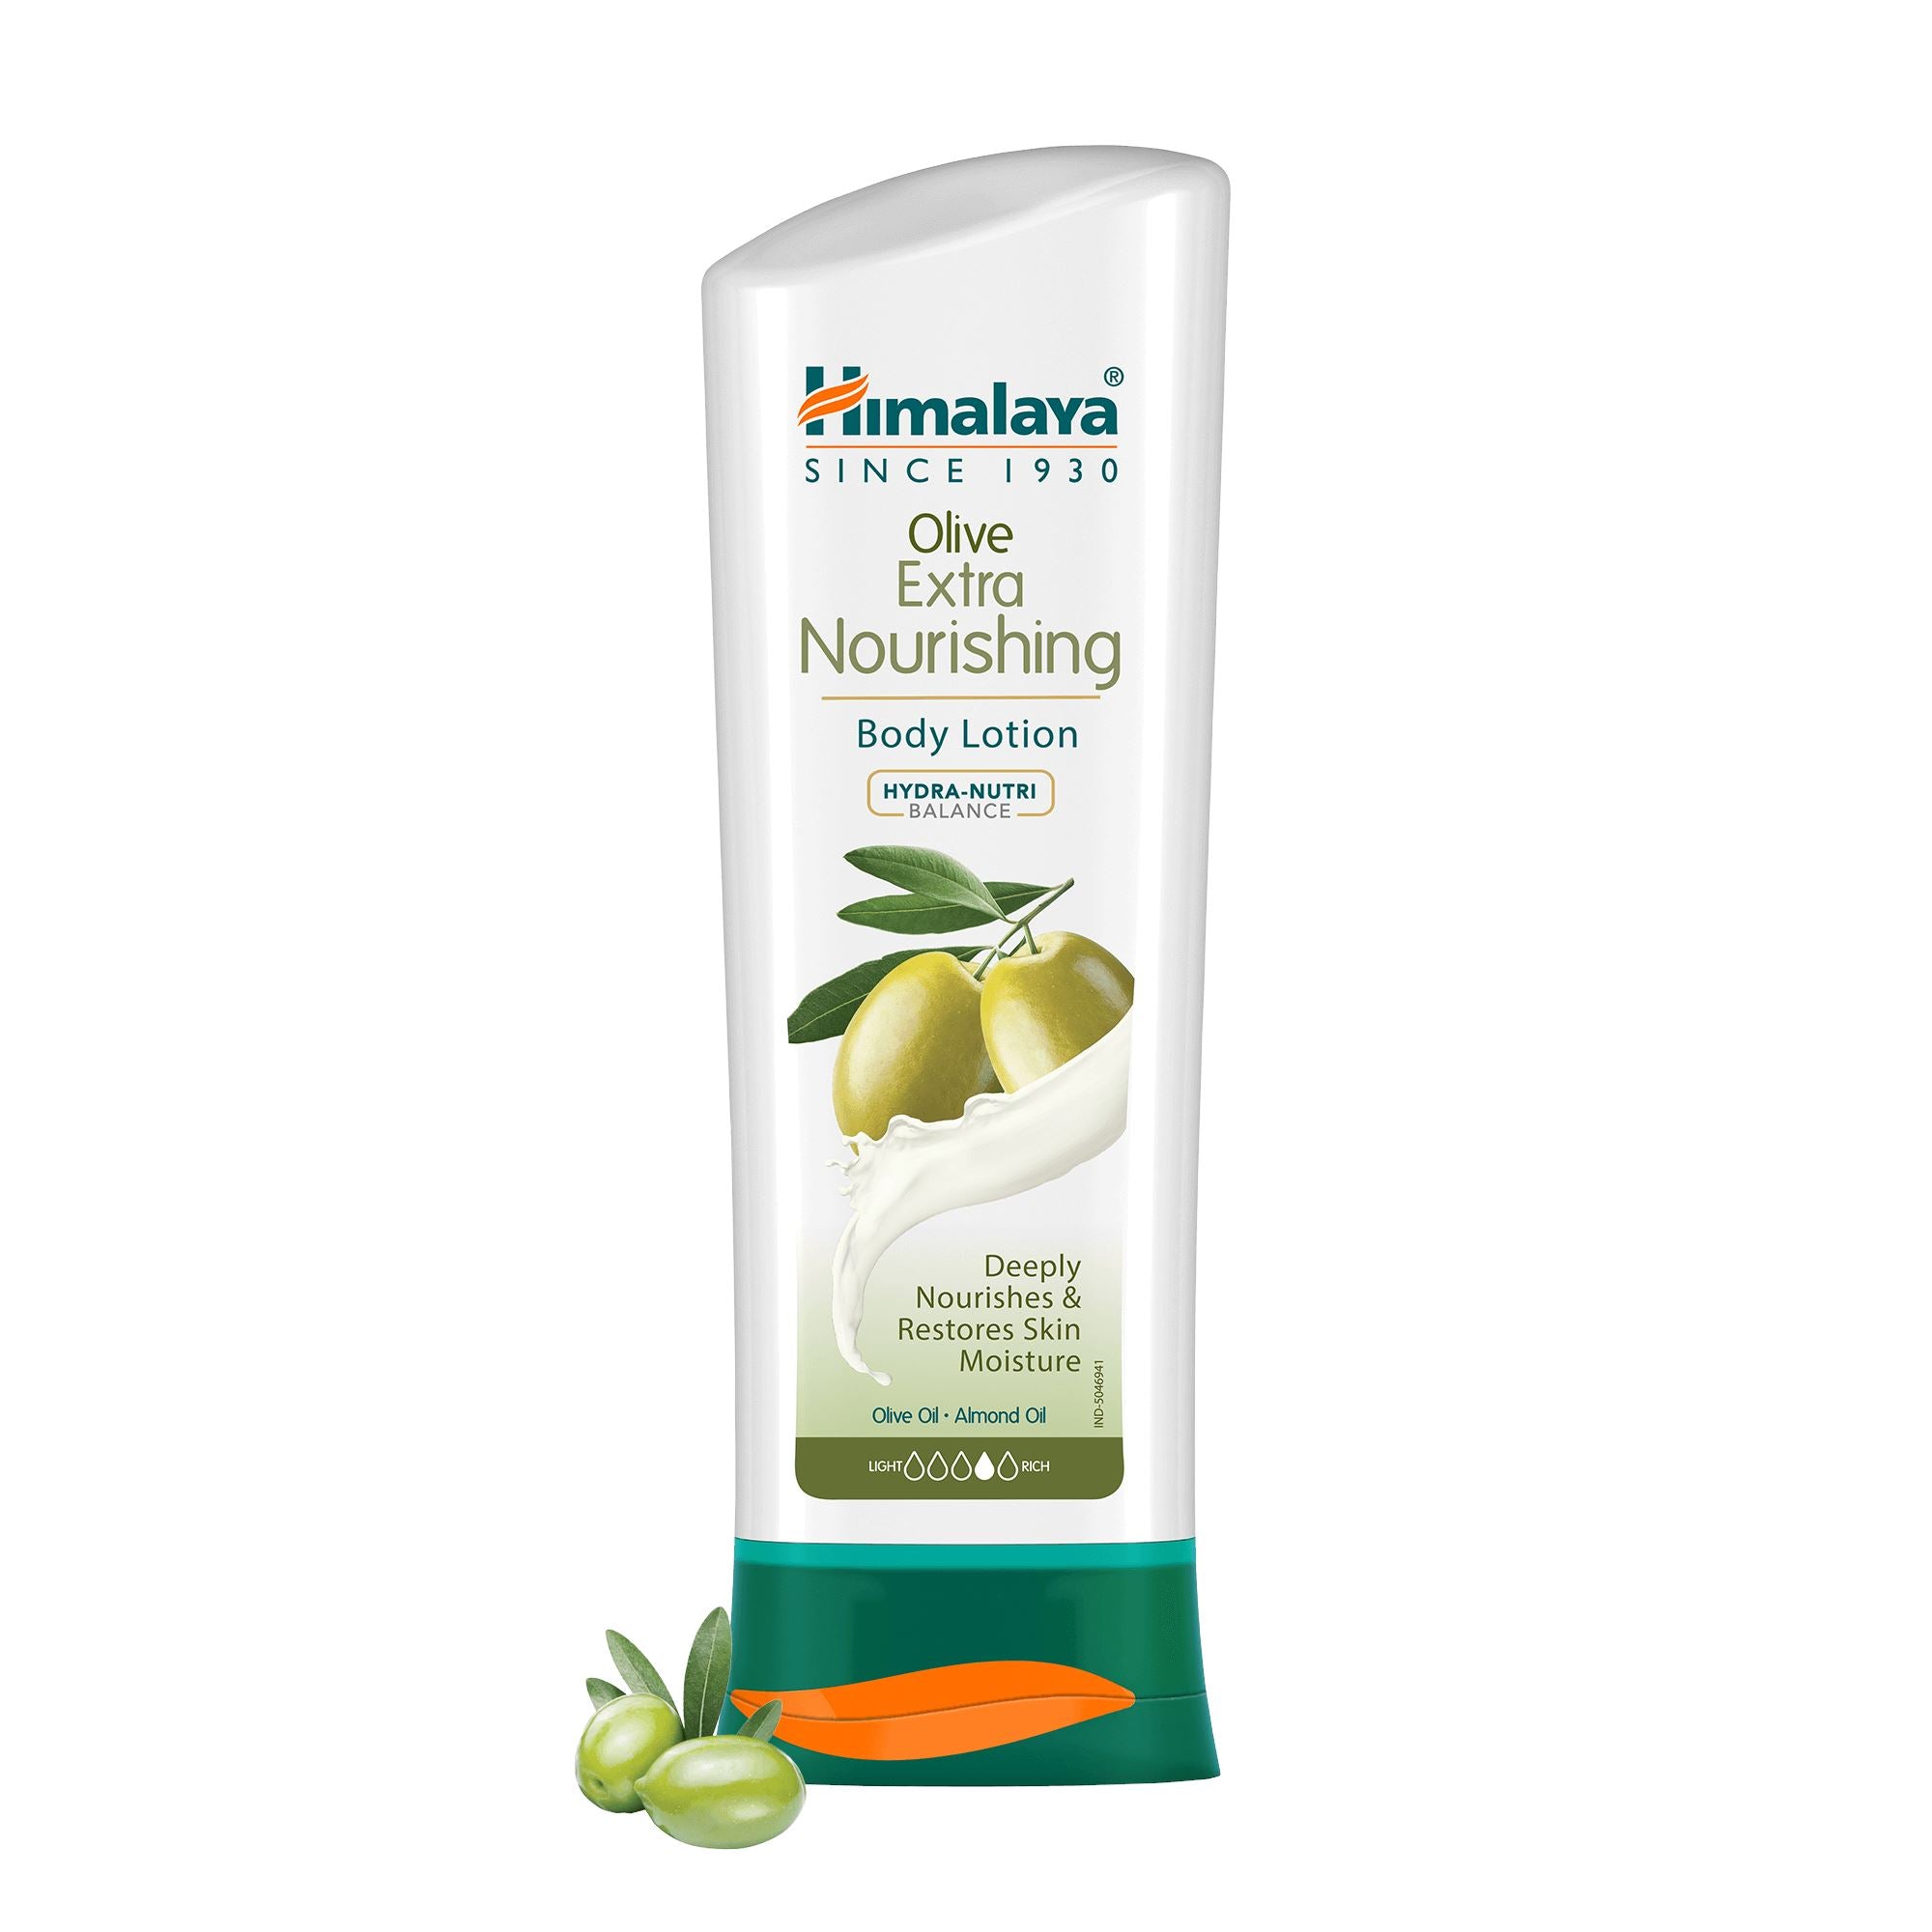 Himalaya Olive Extra Nourishing Body Lotion 200ml - Restores Moisture